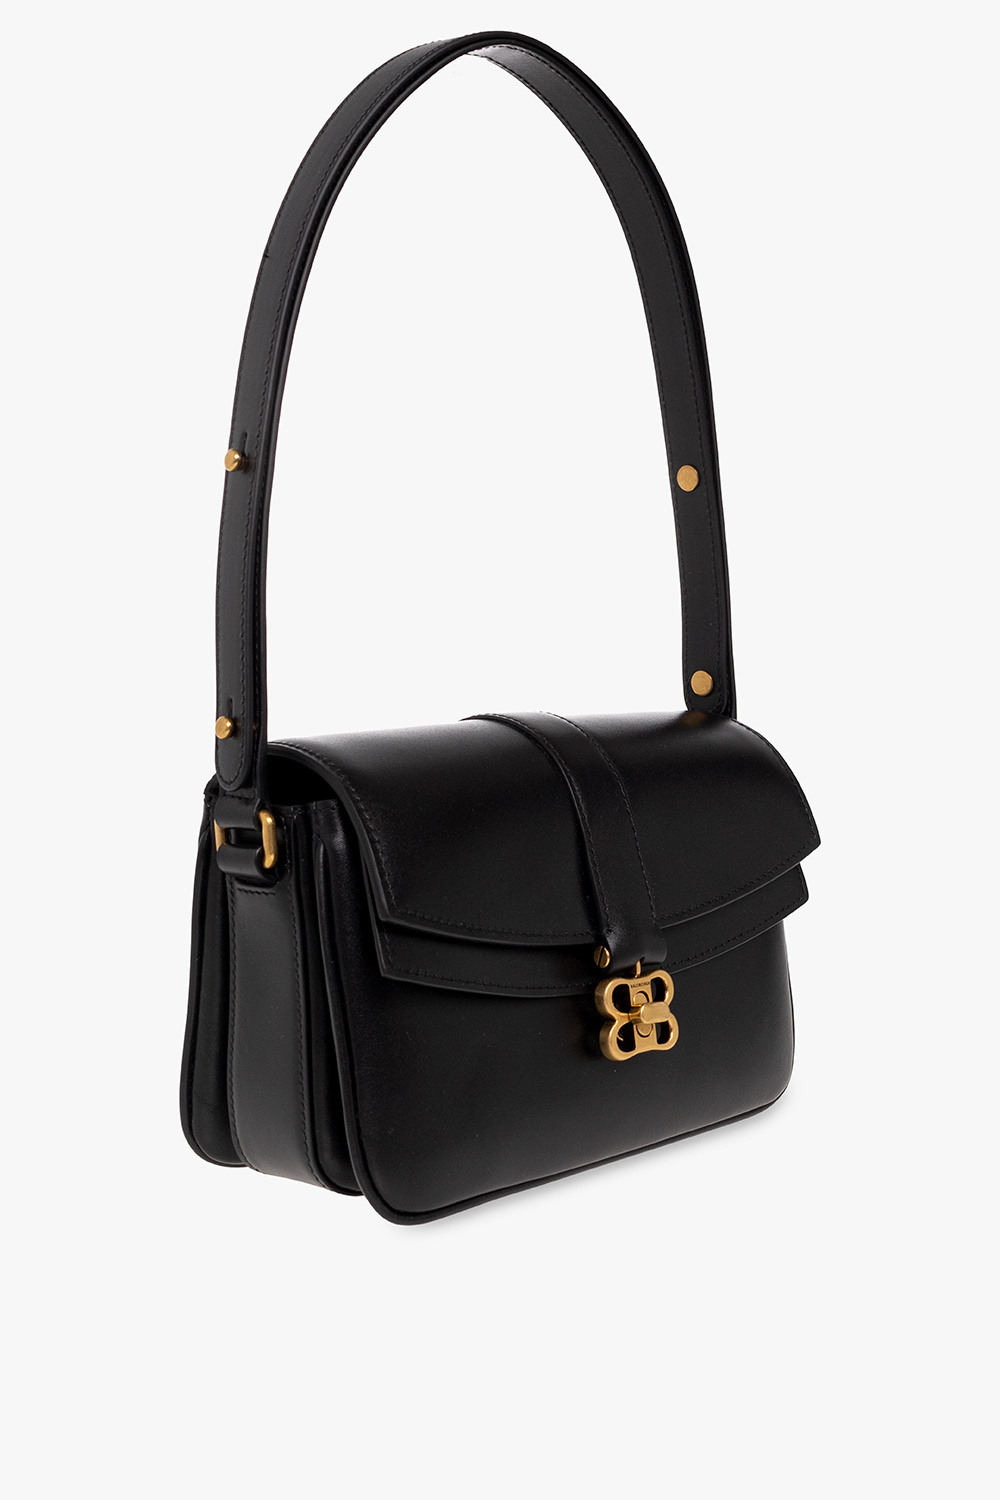 Balenciaga ‘Lady Flap Small’ shoulder bag